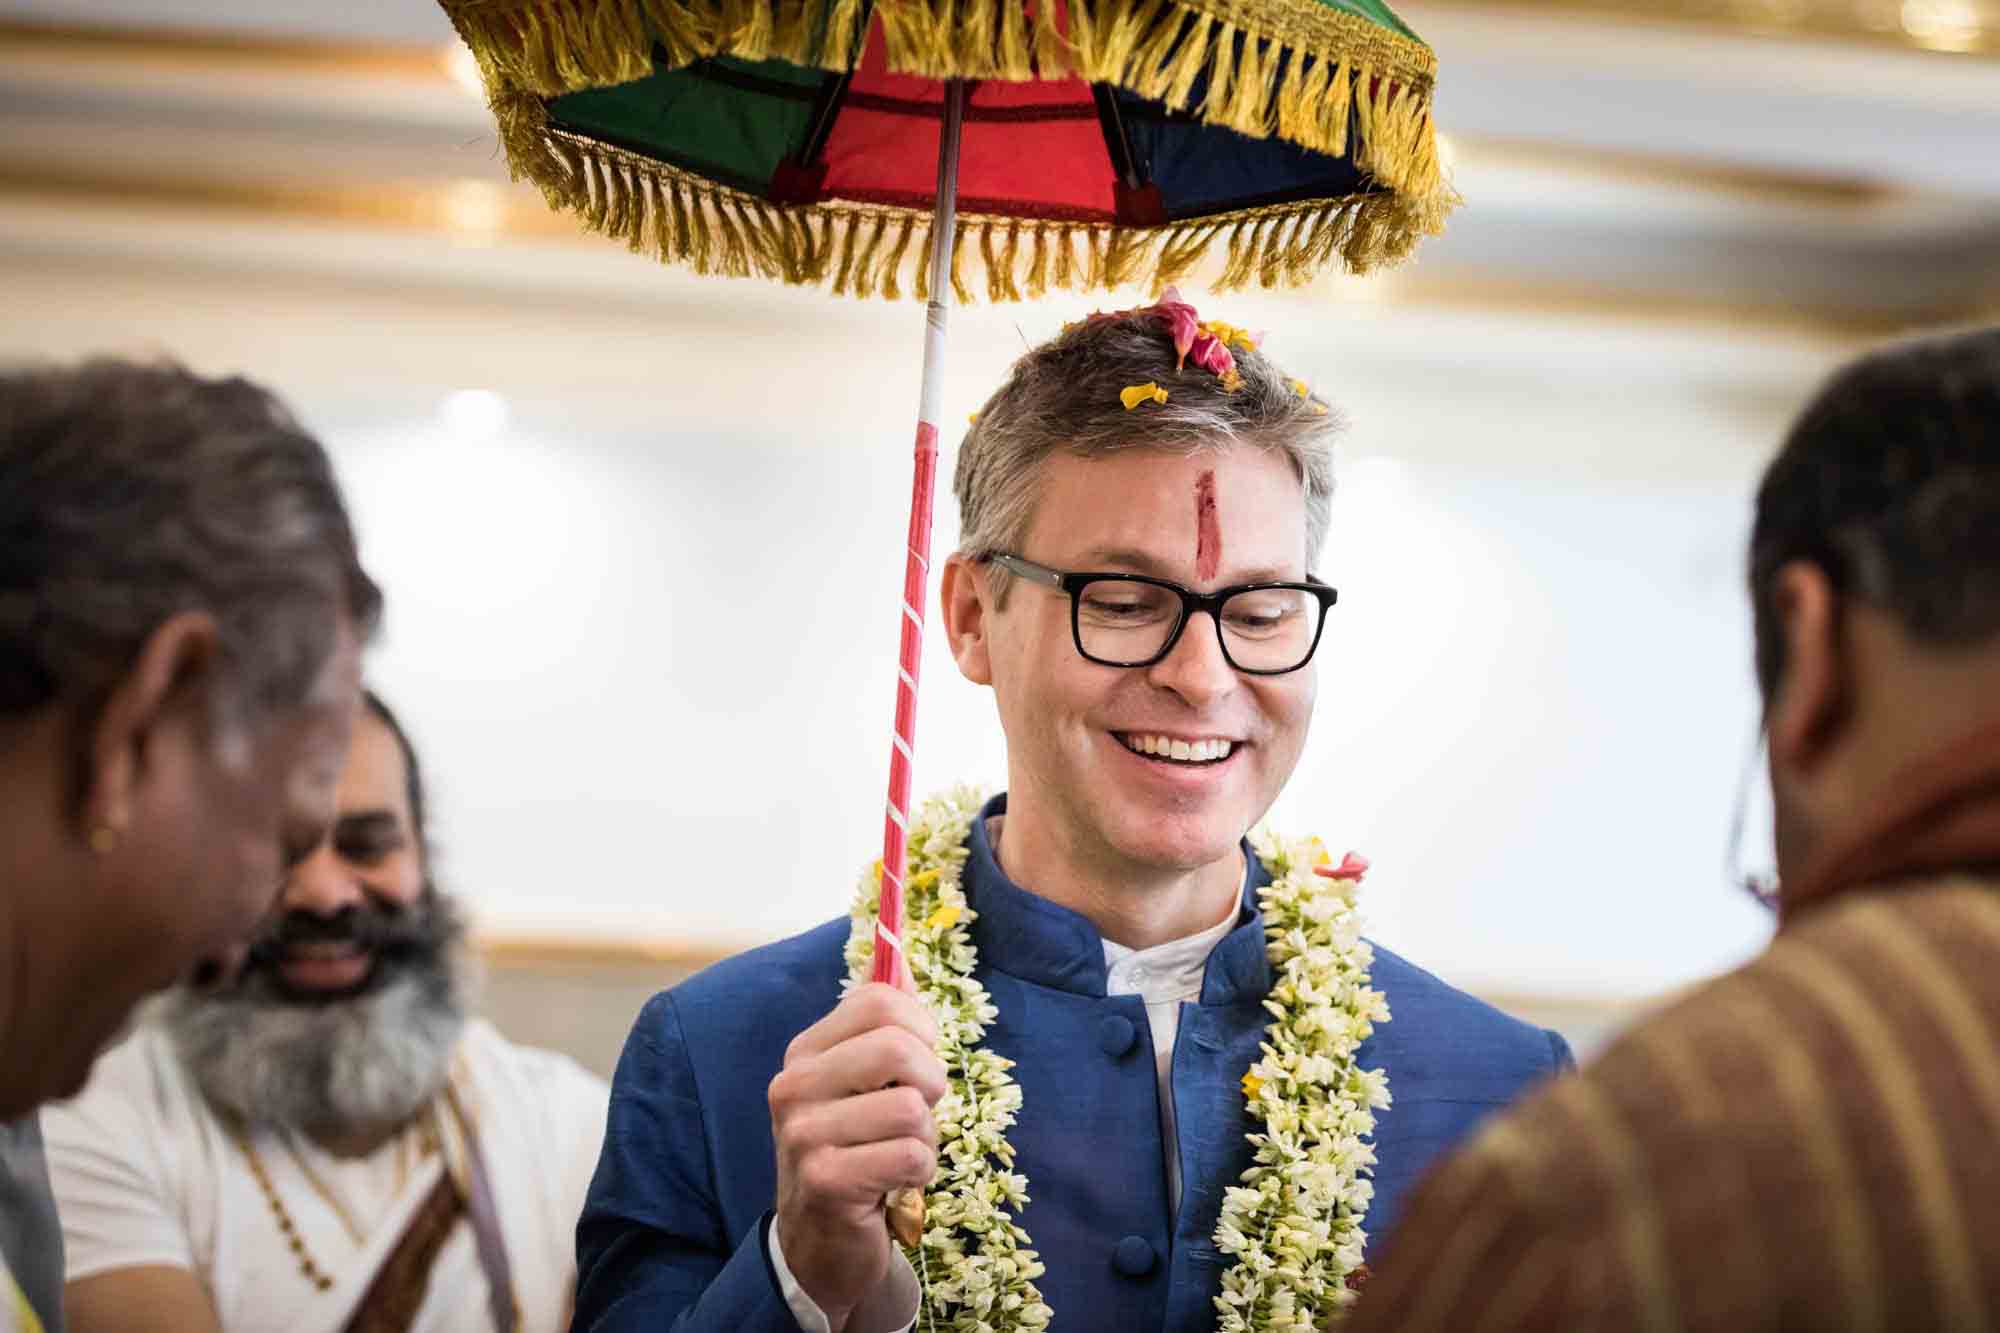 Flushing Temple wedding photos of groom holding colorful umbrella overhead